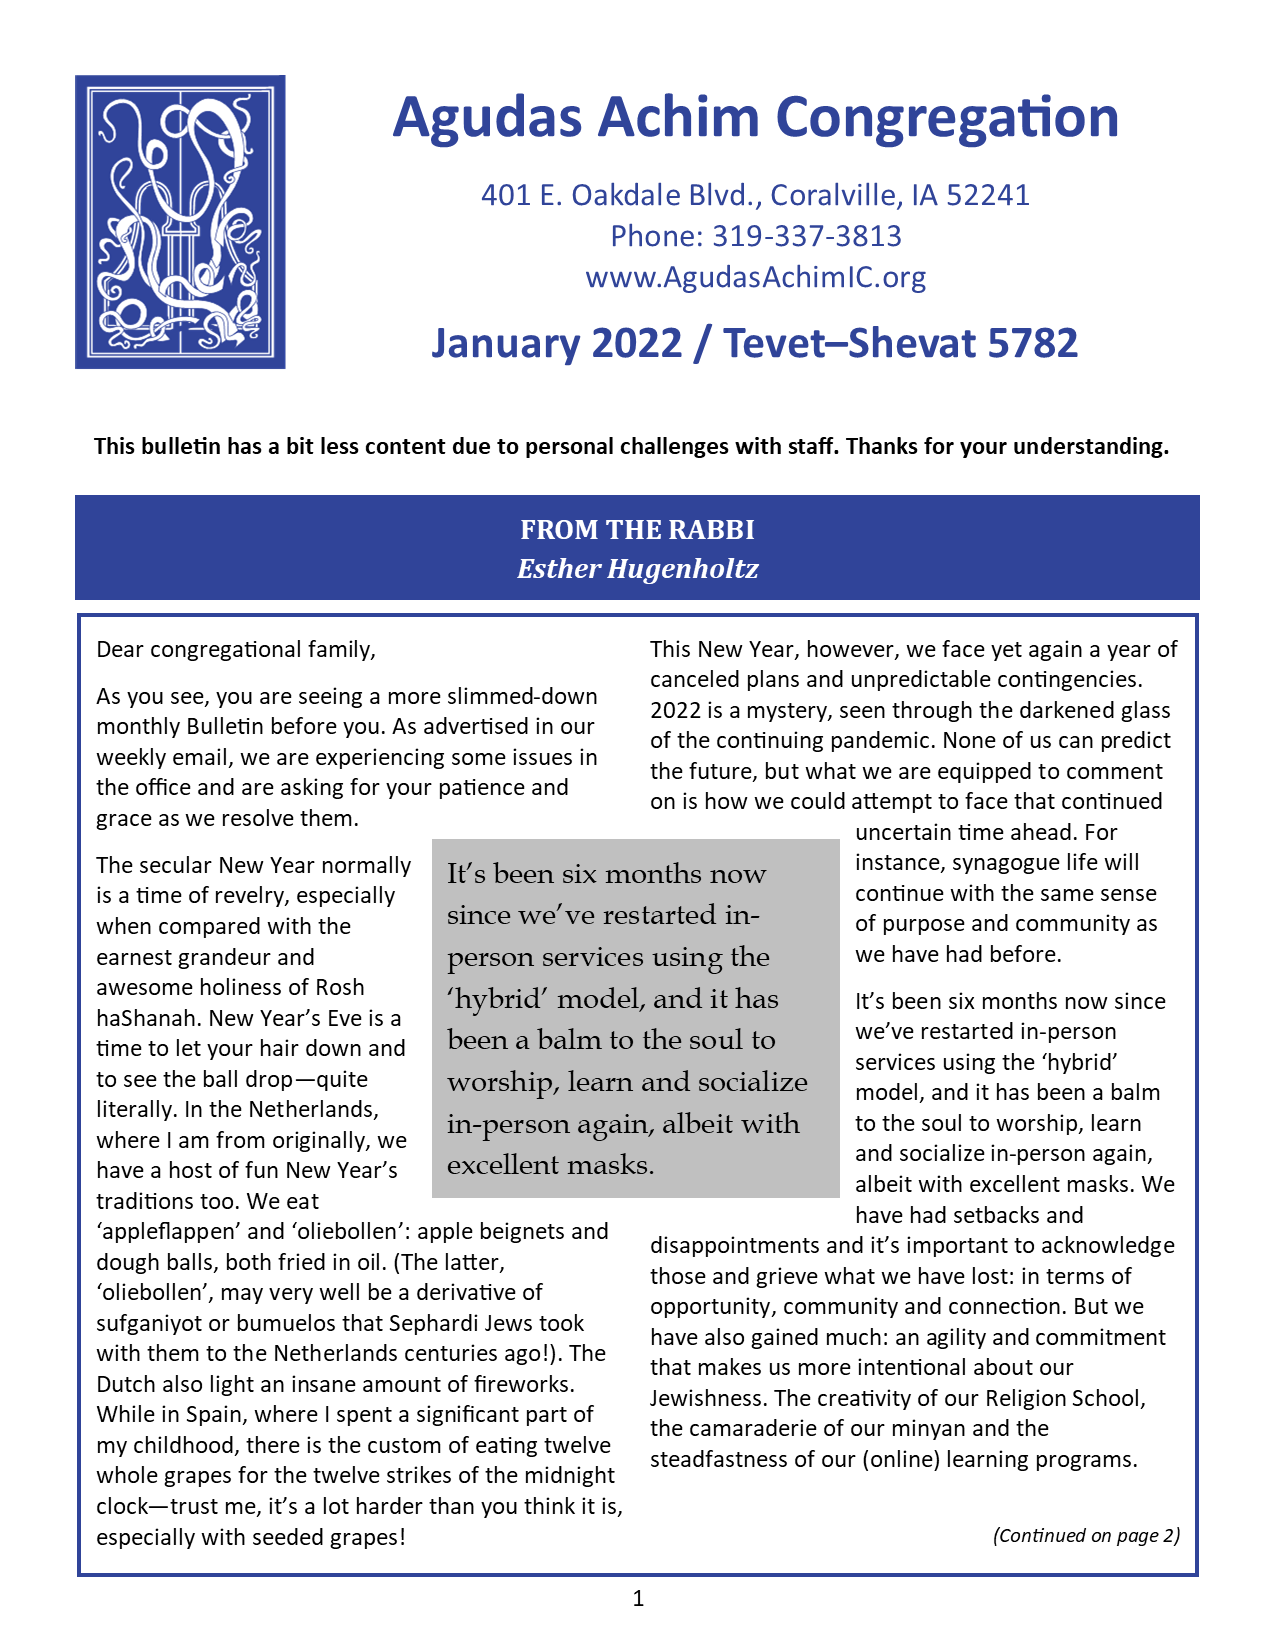 January 2022 Bulletin